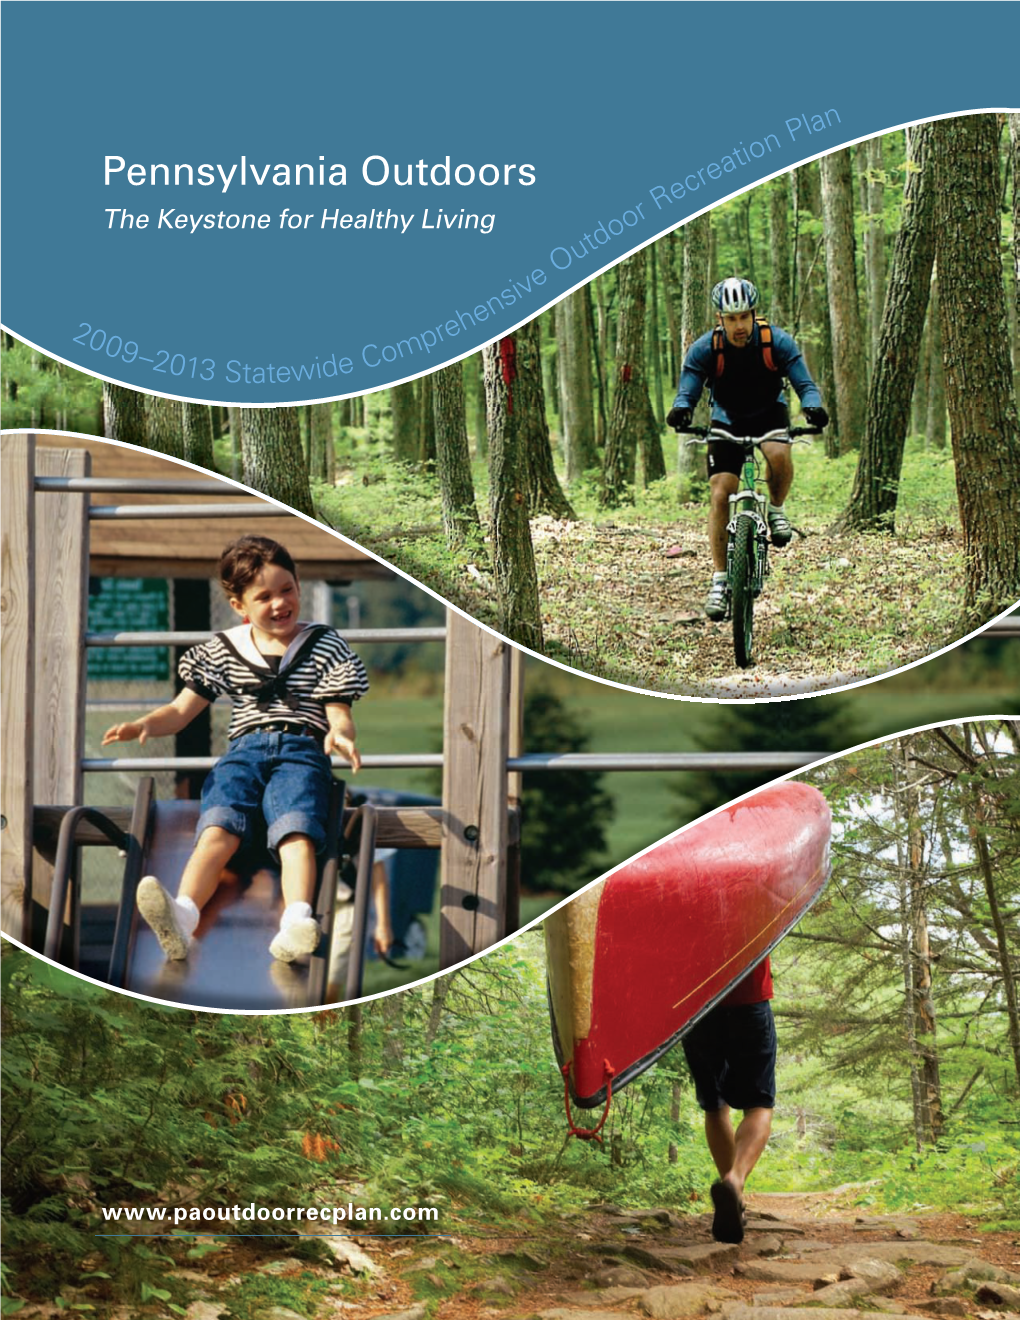 Pennsylvania Outdoors Ec R the Keystone for Healthy Living Or Do Ut O E Iv Ns He 20 Pre 09– Om 2013 Statewide C